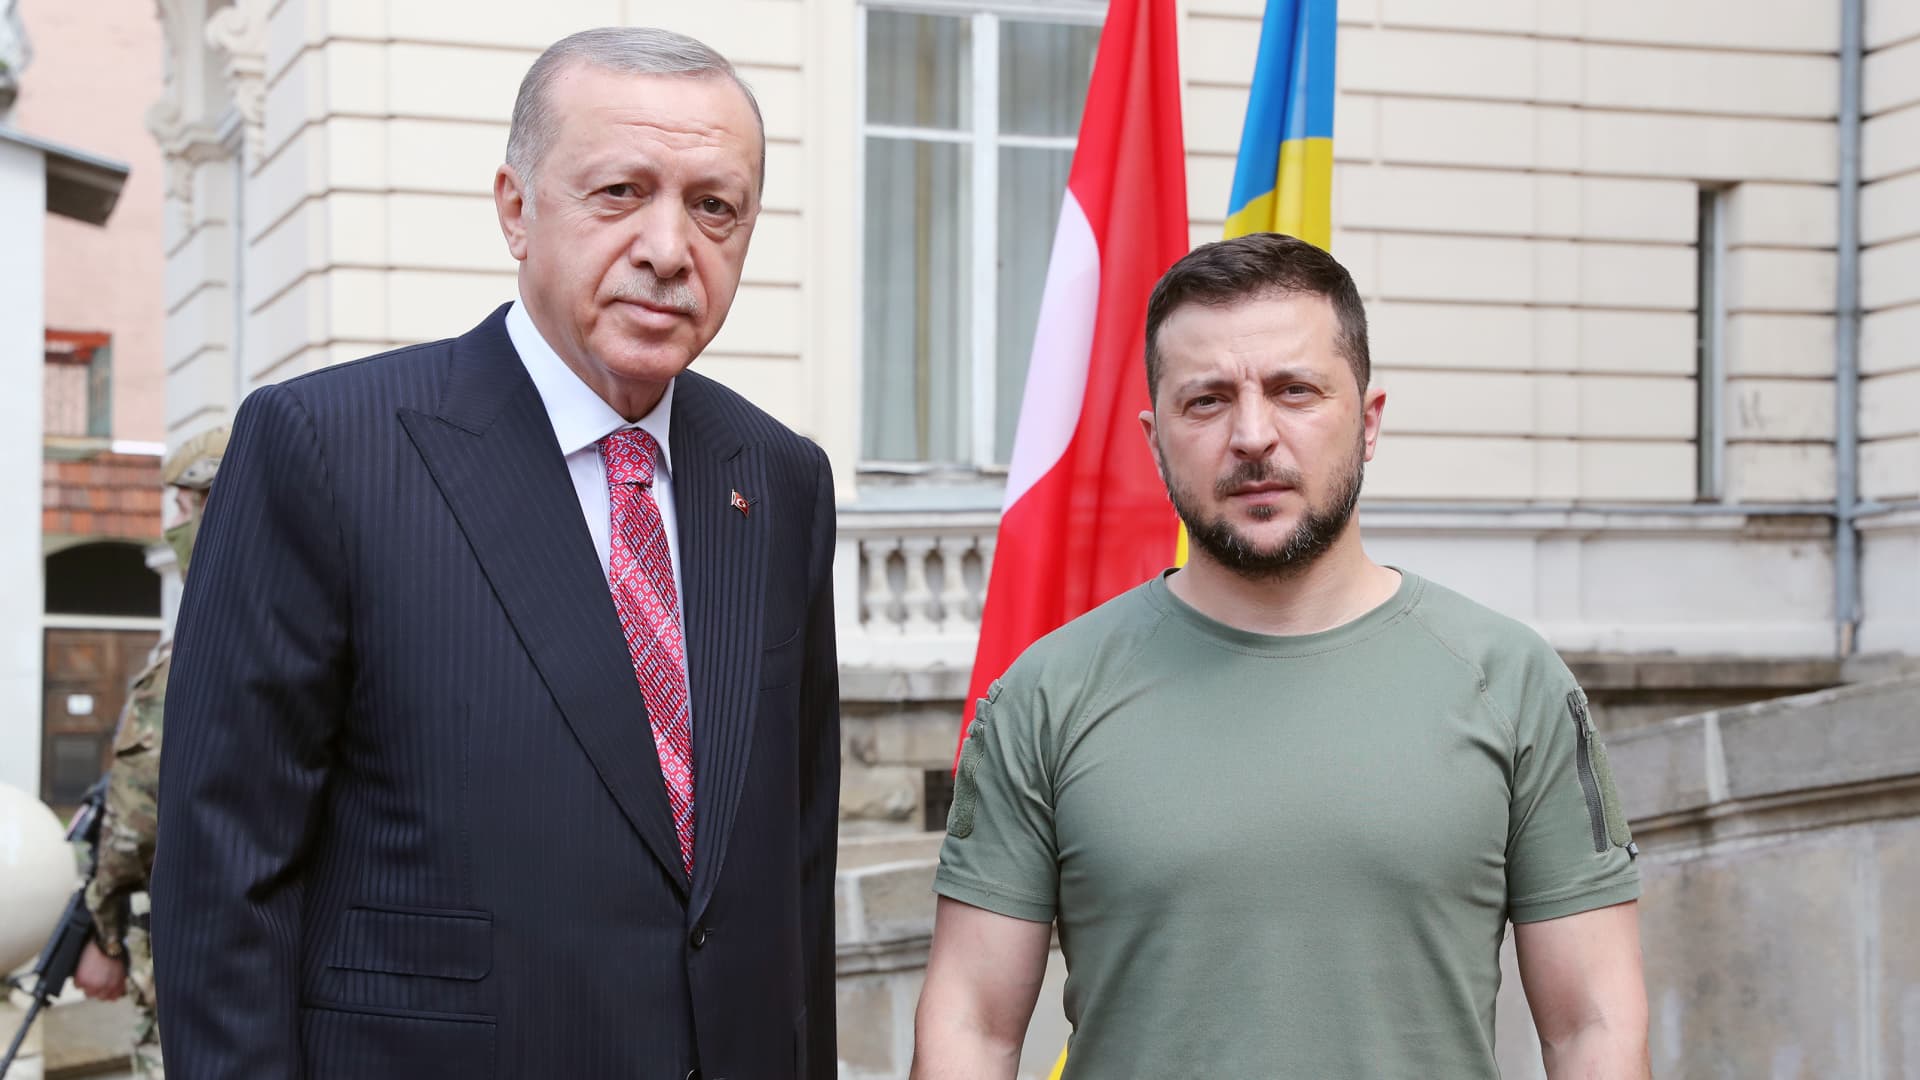 Turkish President Recep Tayyip Erdogan (L) meets with Ukrainian President Volodymyr Zelenskyy (R) in Lviv, Ukraine on August 18, 2022.